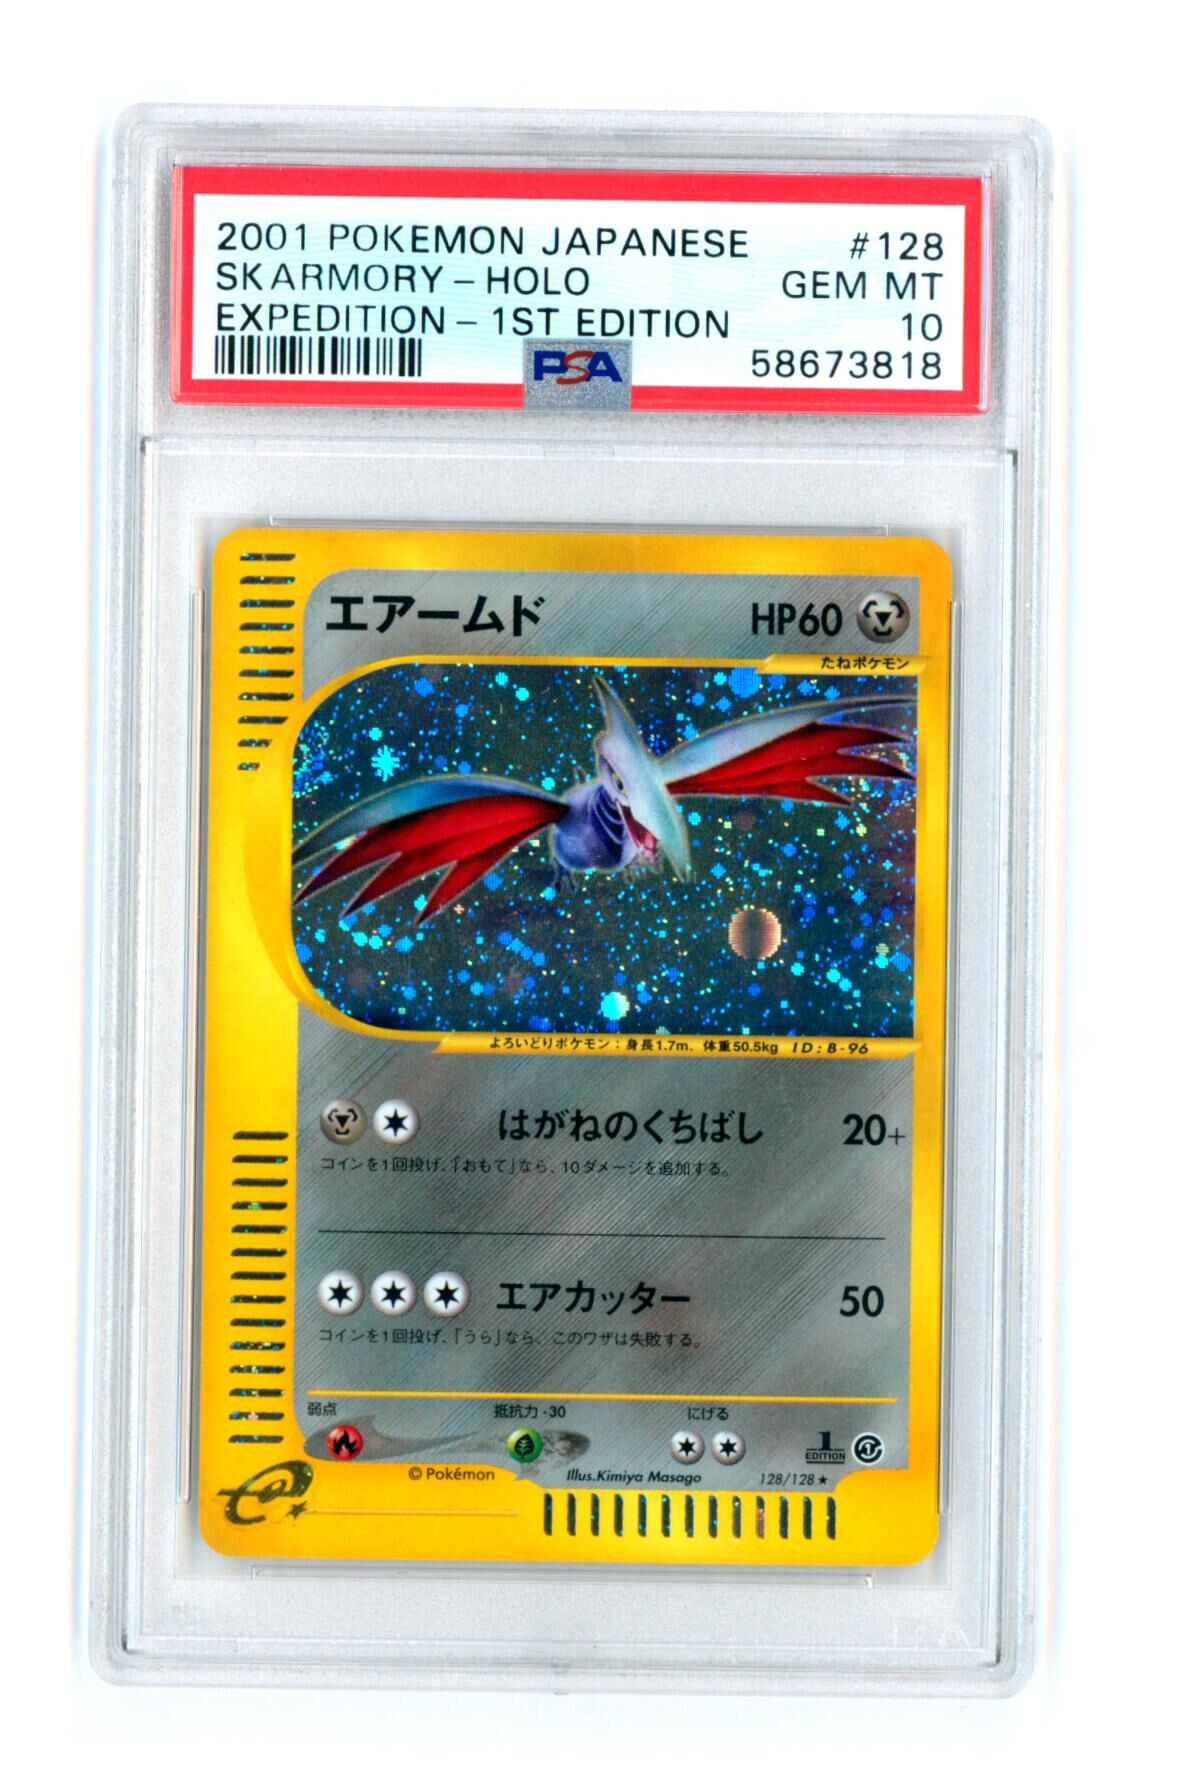 Skarmory 128/128 - Expedition 1ST Edition - Japanese - Holo - PSA 10 GEM MT - Pokémon